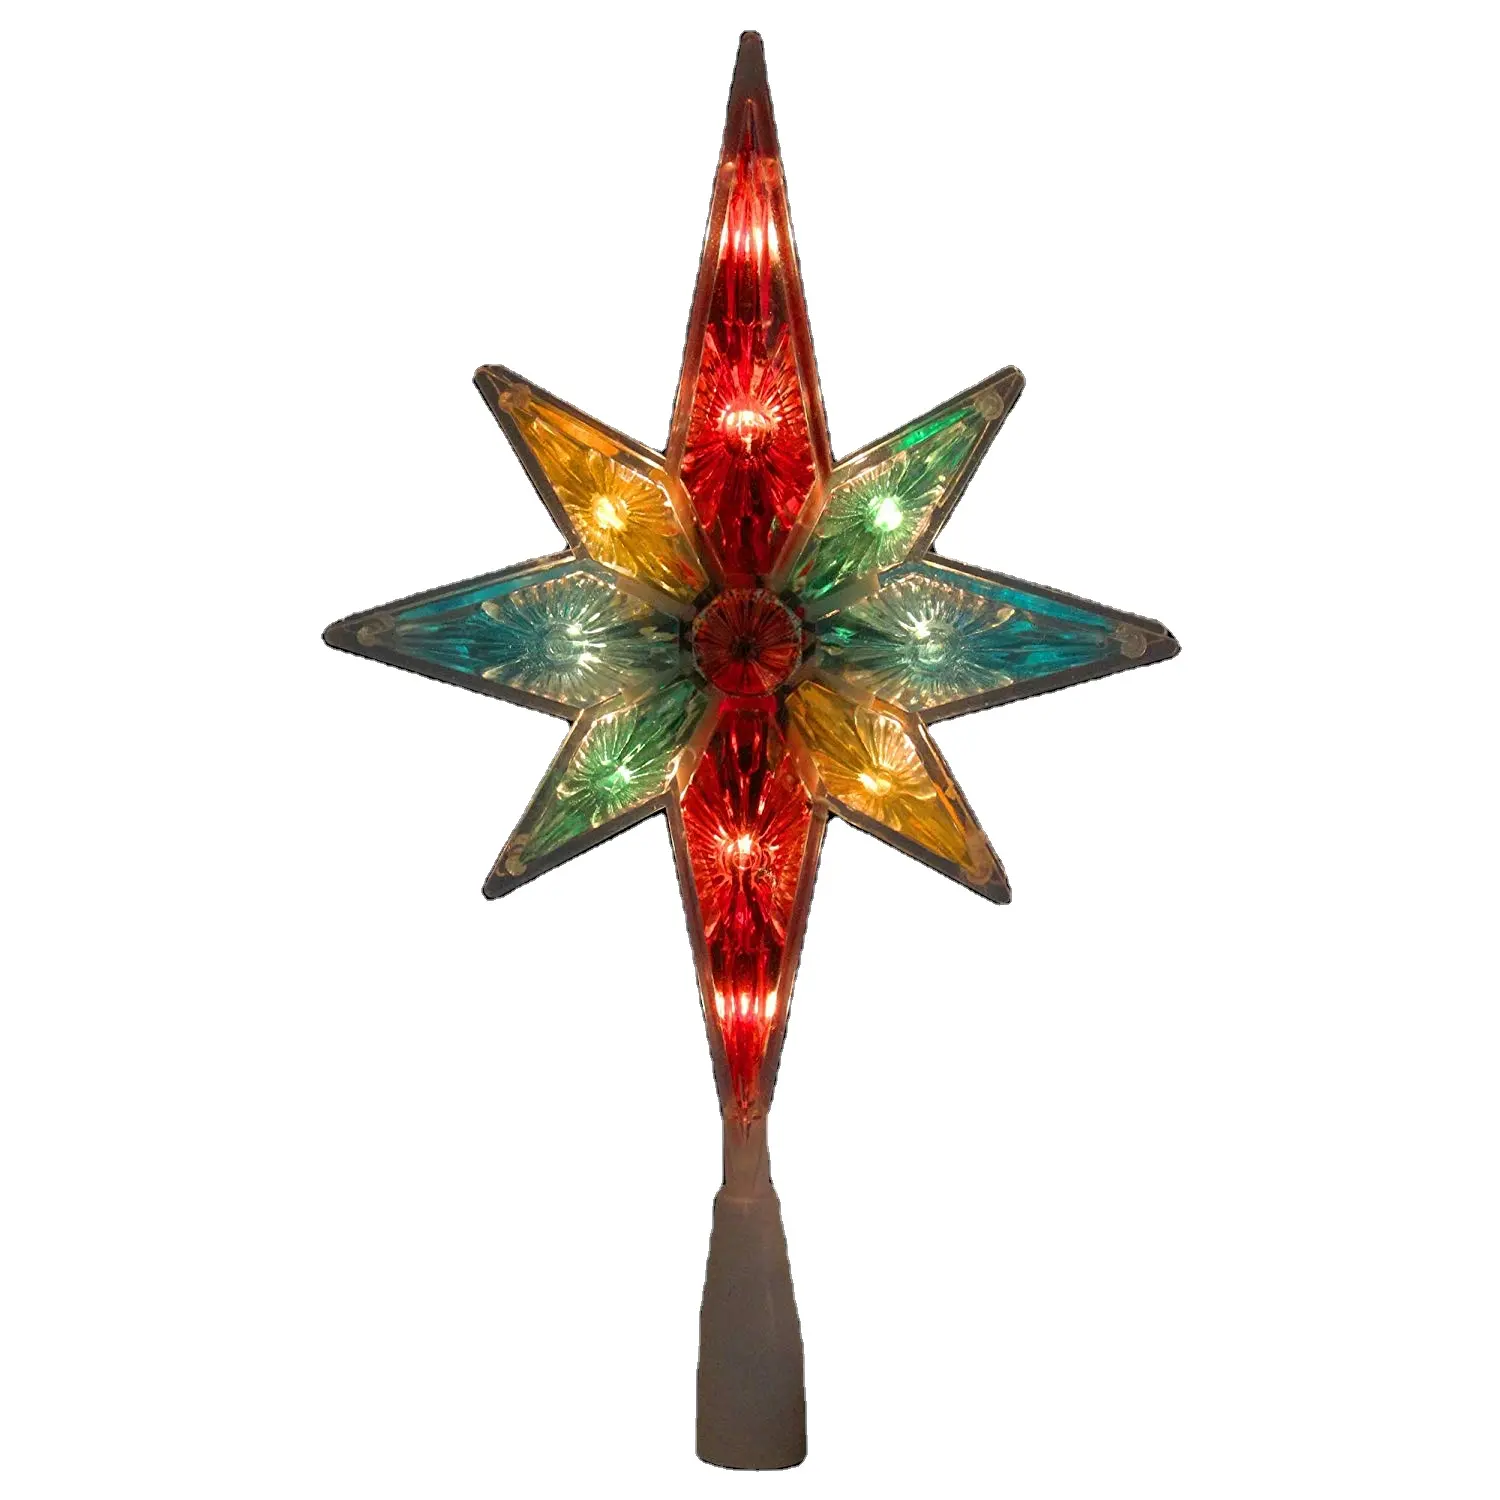 UL 11 "רב צבעוני פיאות כוכב בית לחם חג המולד עץ טופר עם 10 אורות